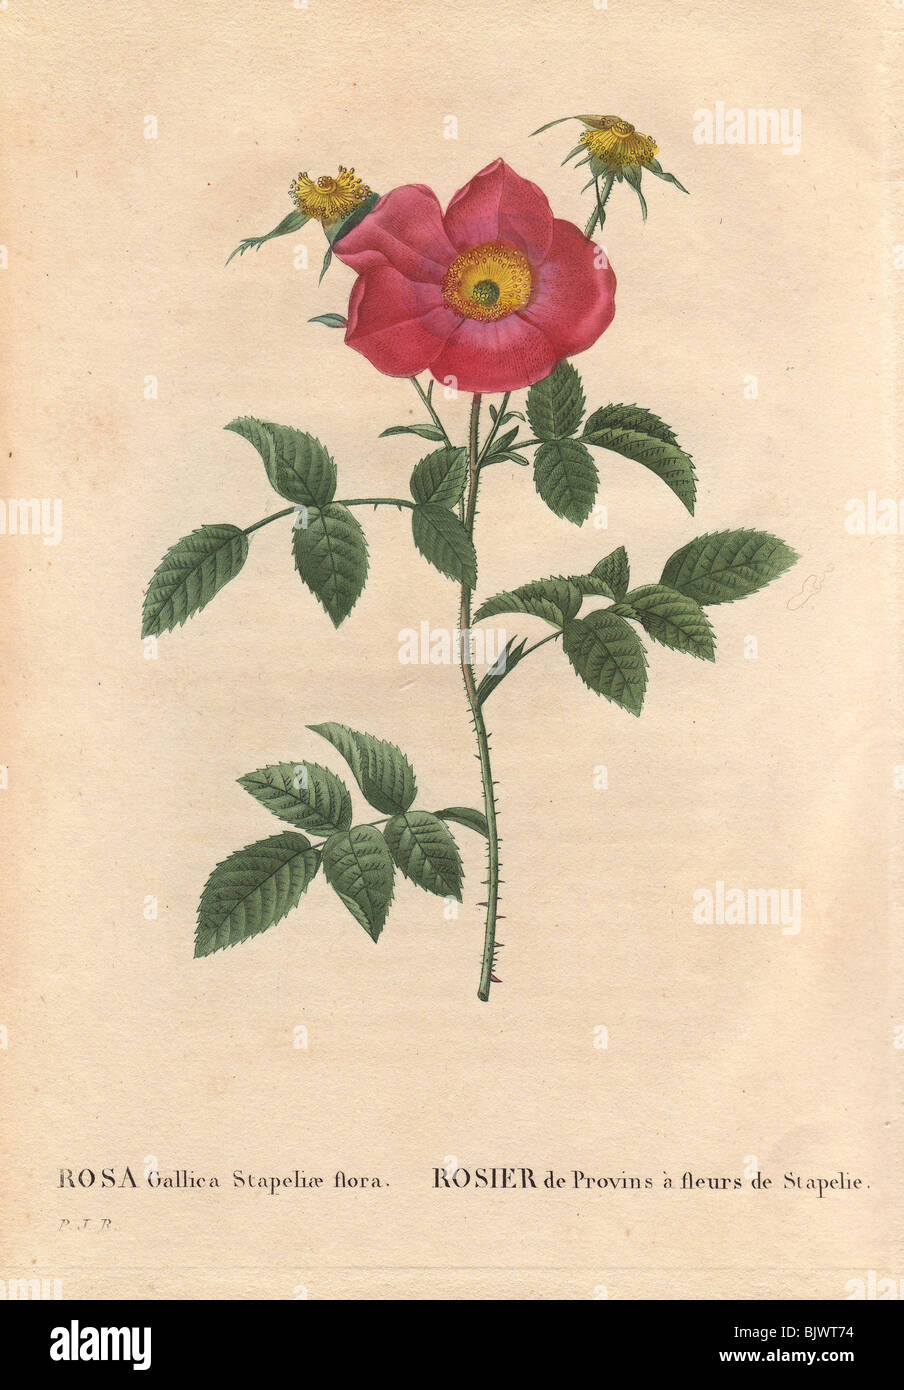 Stapelia-flowered Provins rose with crimson flowers (Rosa gallica stapeliae flora). Stock Photo